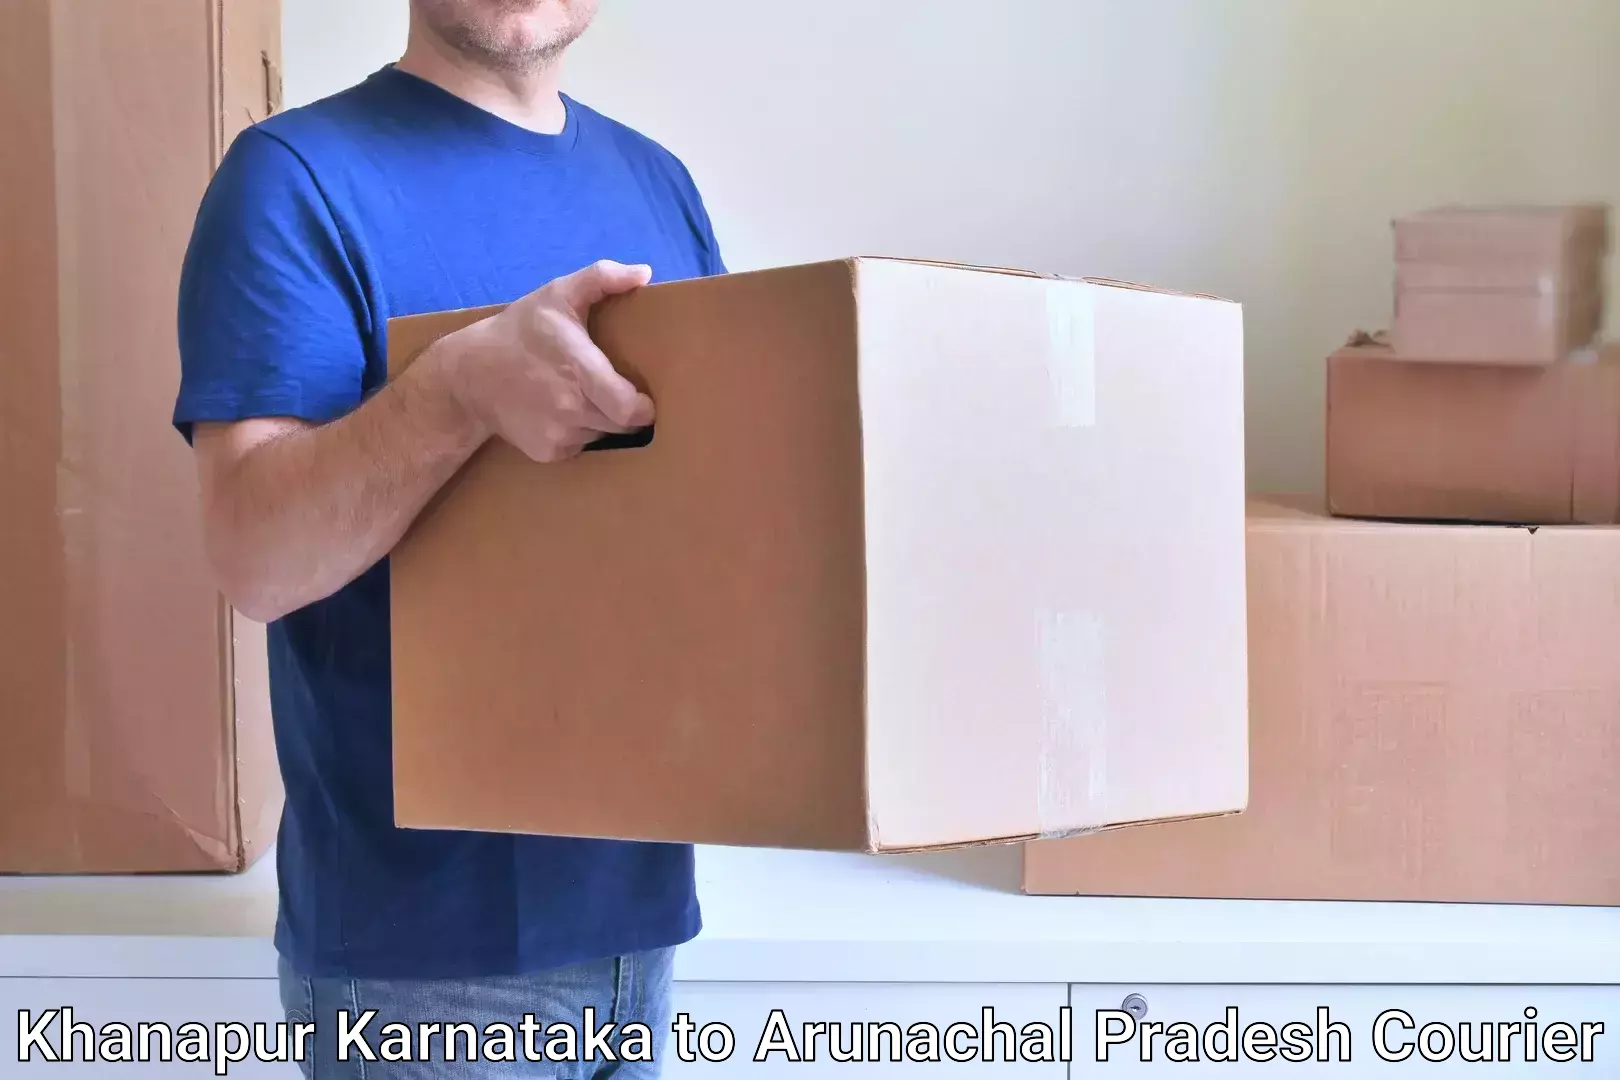 Secure package delivery Khanapur Karnataka to Arunachal Pradesh